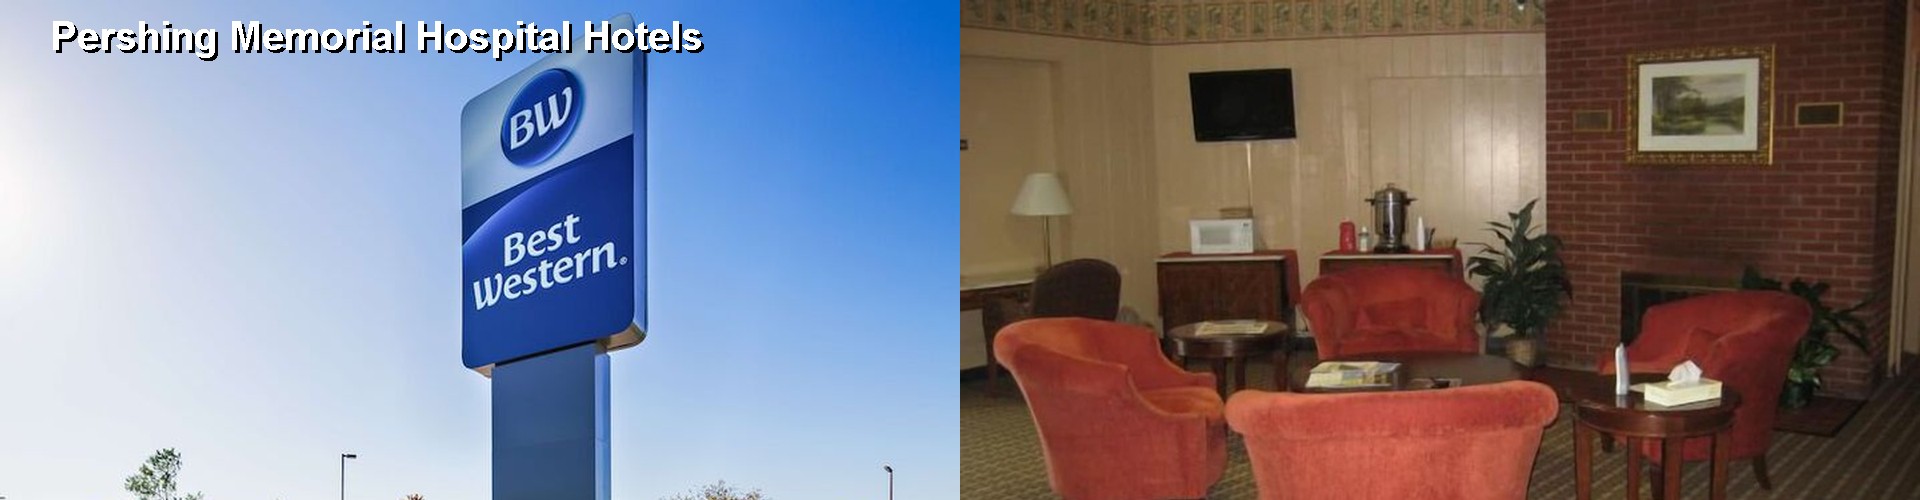 2 Best Hotels near Pershing Memorial Hospital